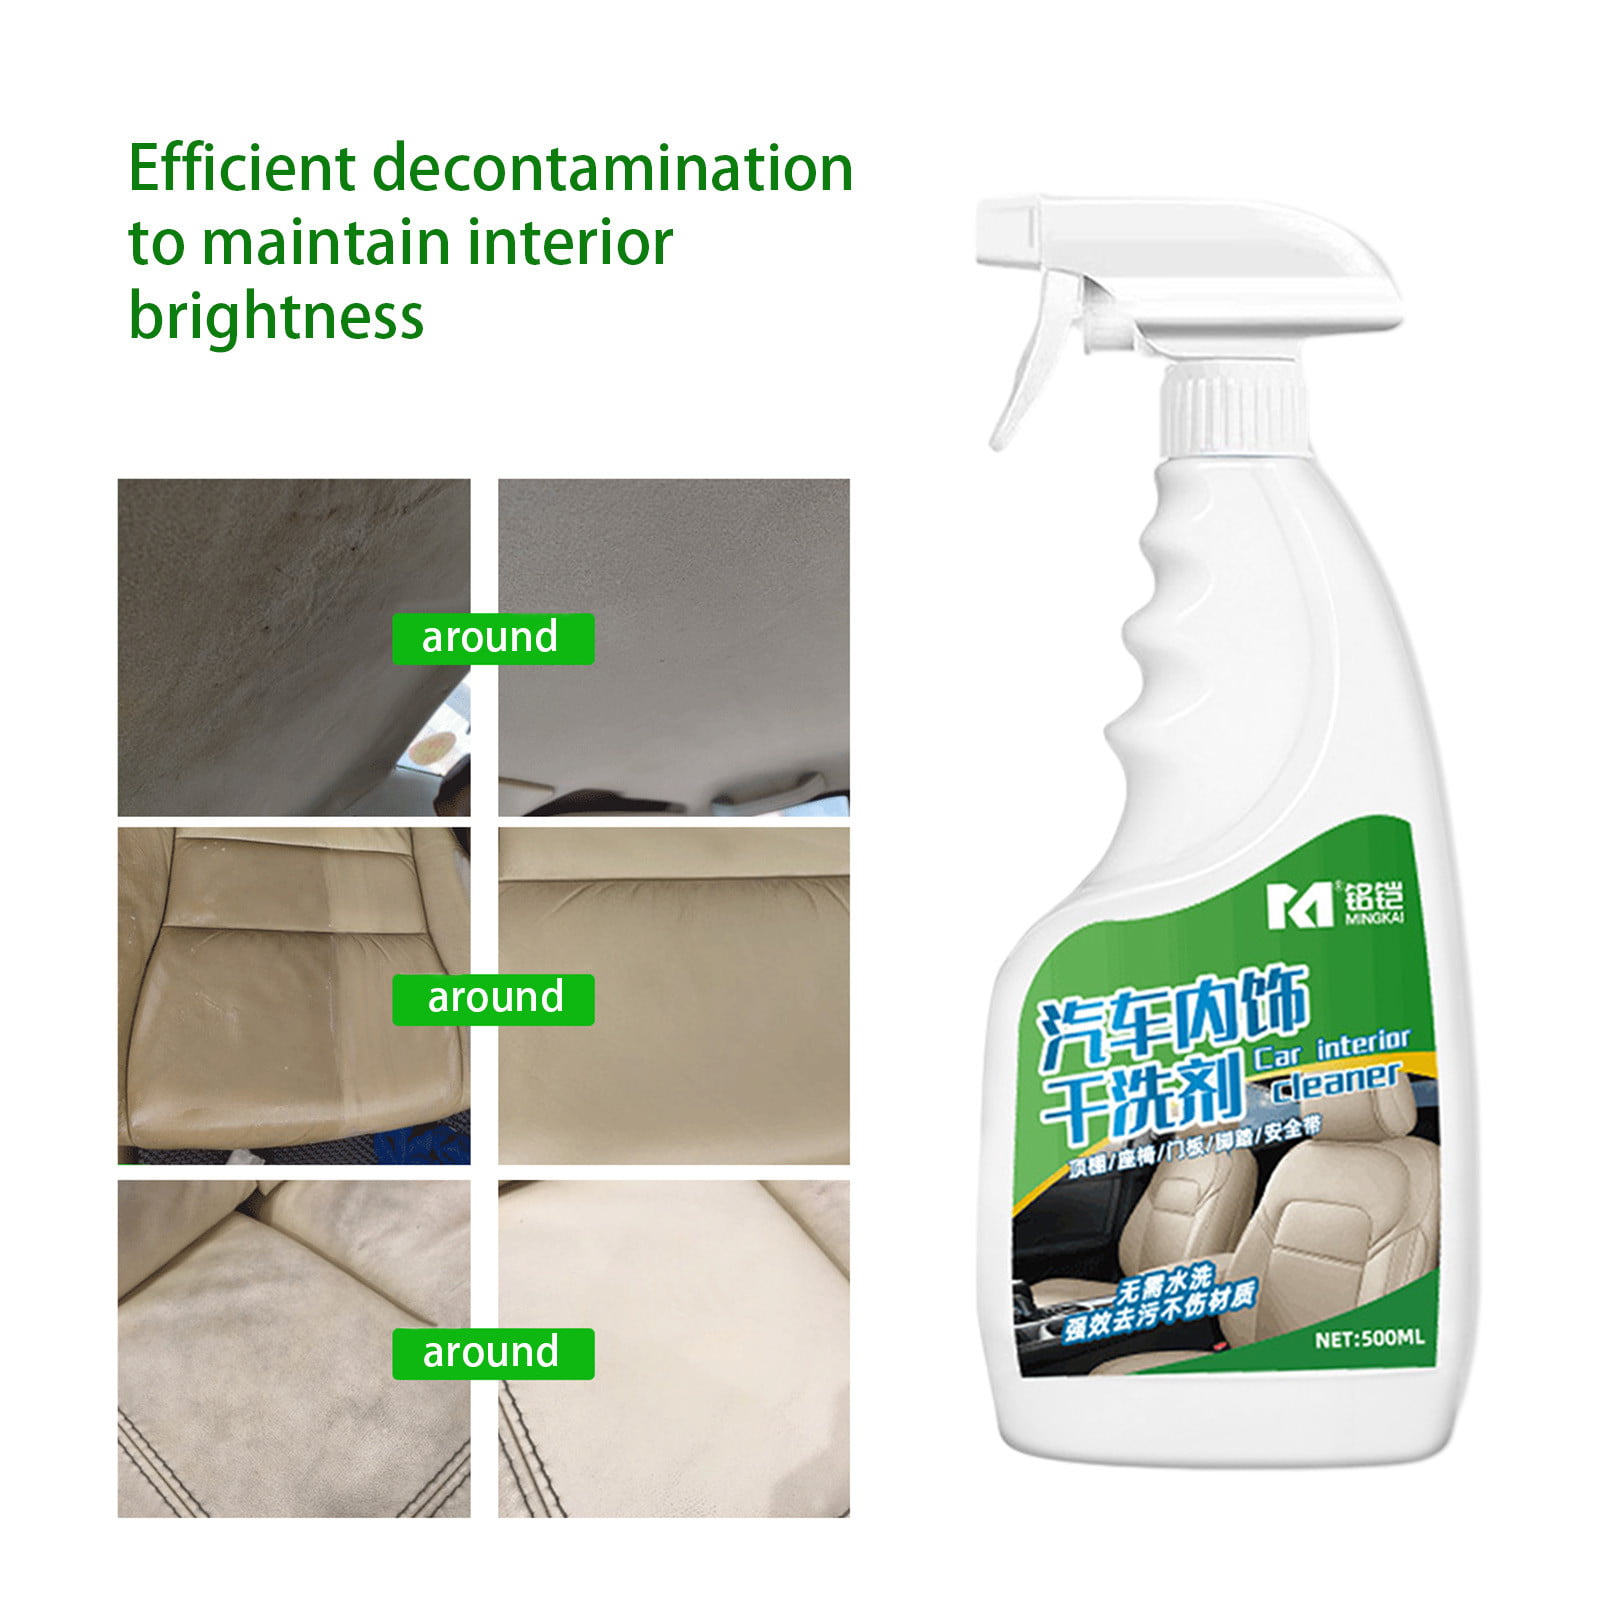 Chemical Guys SPI22064 Total Interior Cleaner & Protectant (64 oz)